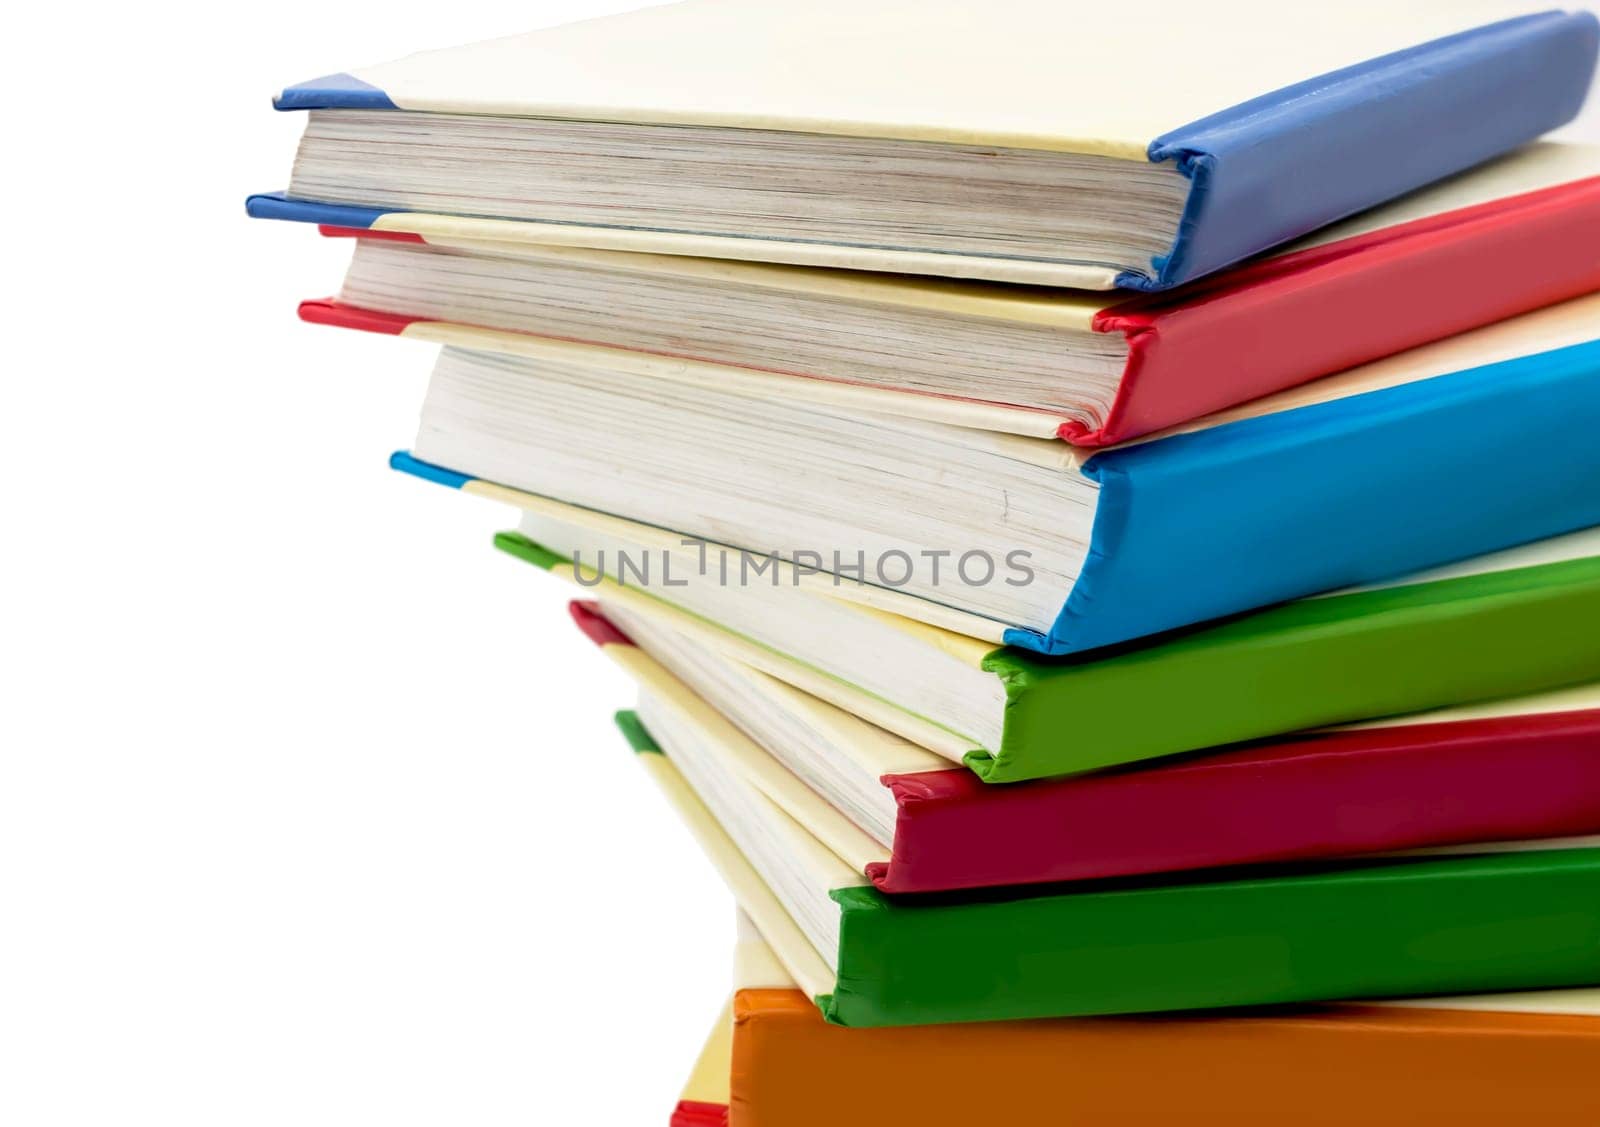 Multicolored books. The school. Stack of bright children's books on white background by aprilphoto